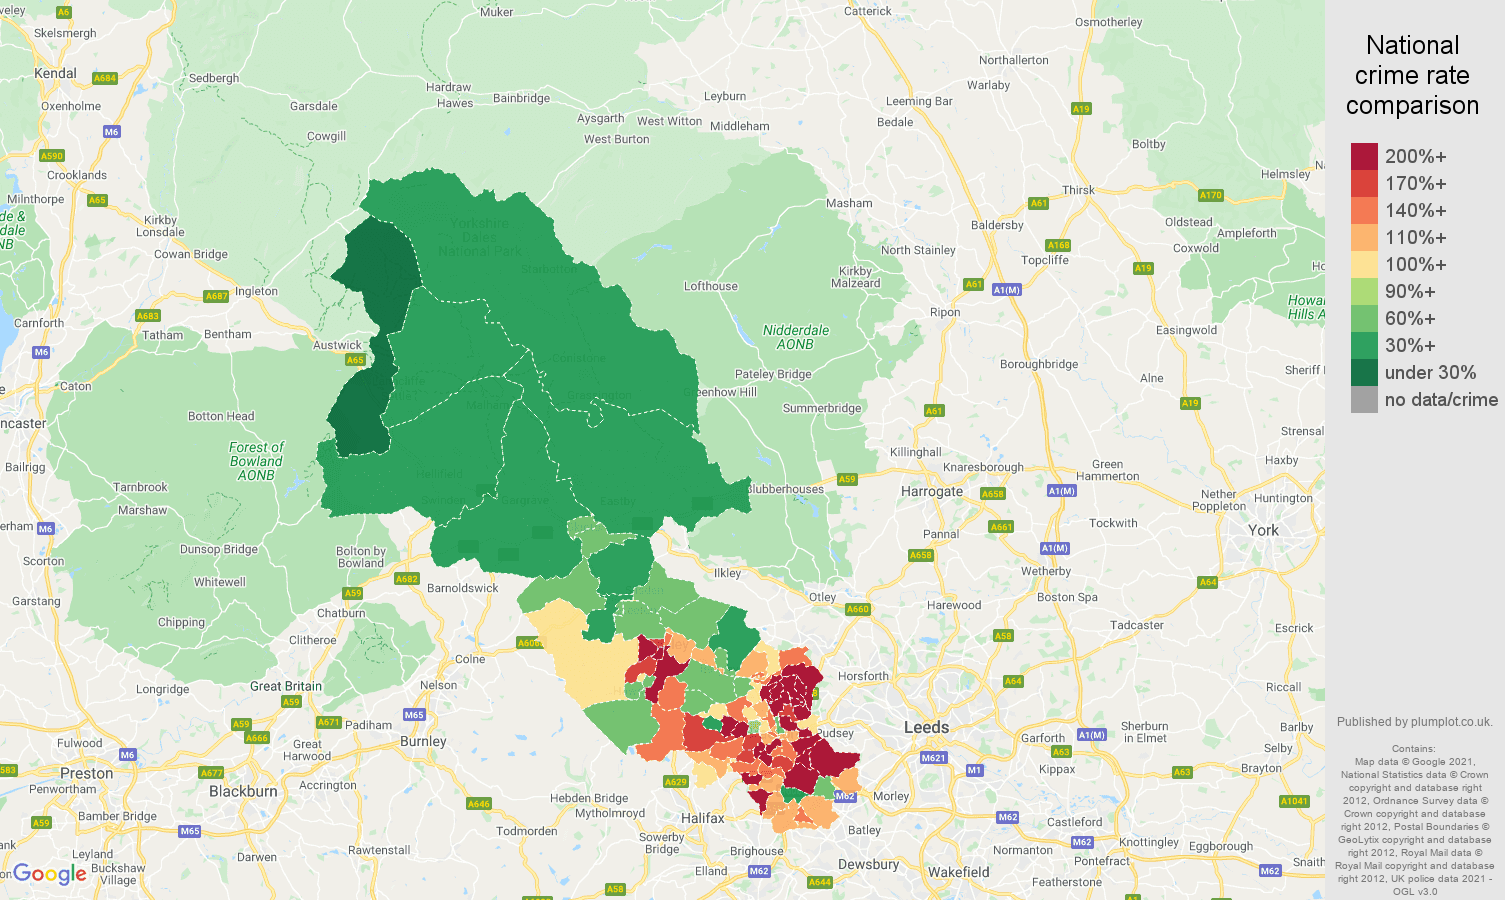 Bradford criminal damage and arson crime rate comparison map